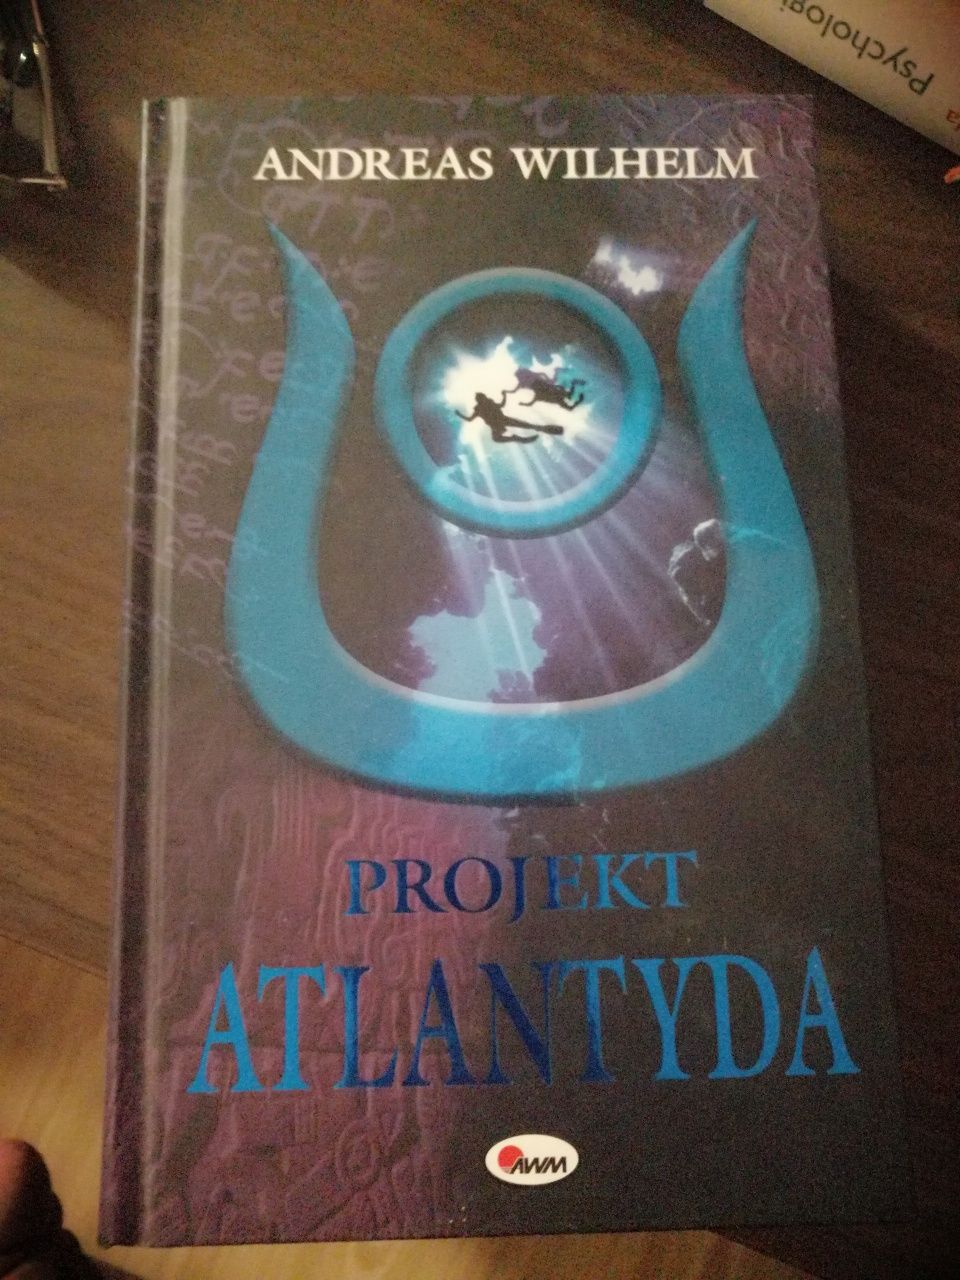 Andreas Wilhelm - Projekt Atlantyda